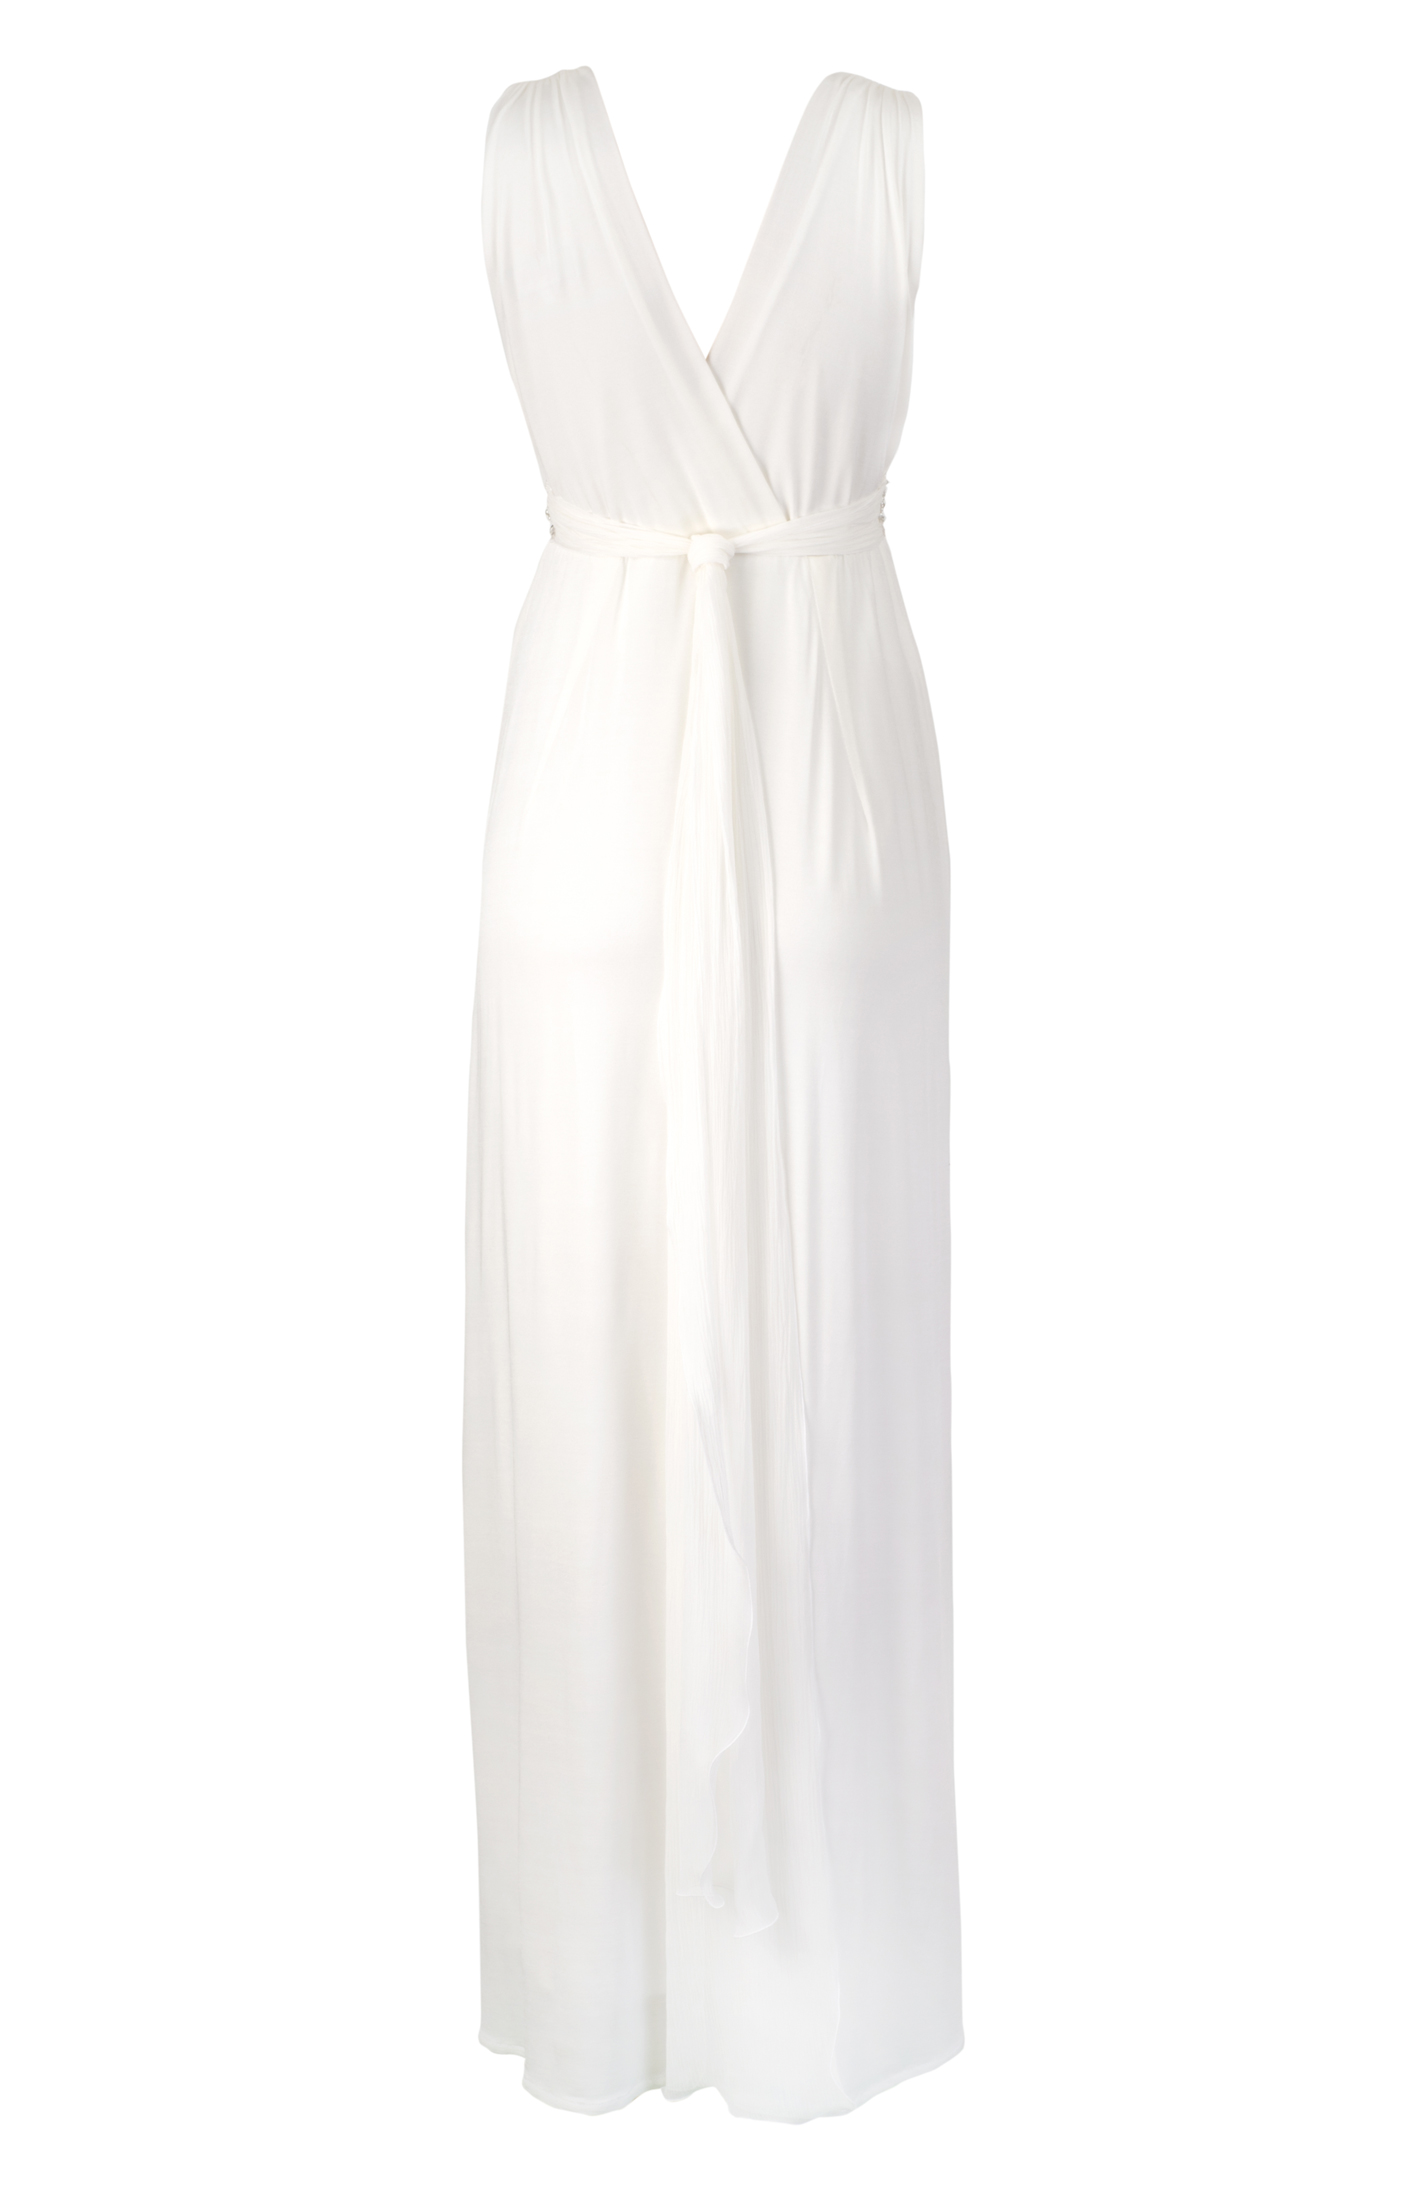 Anastasia Maternity Wedding Gown (Ivory) - Maternity Wedding Dresses ...